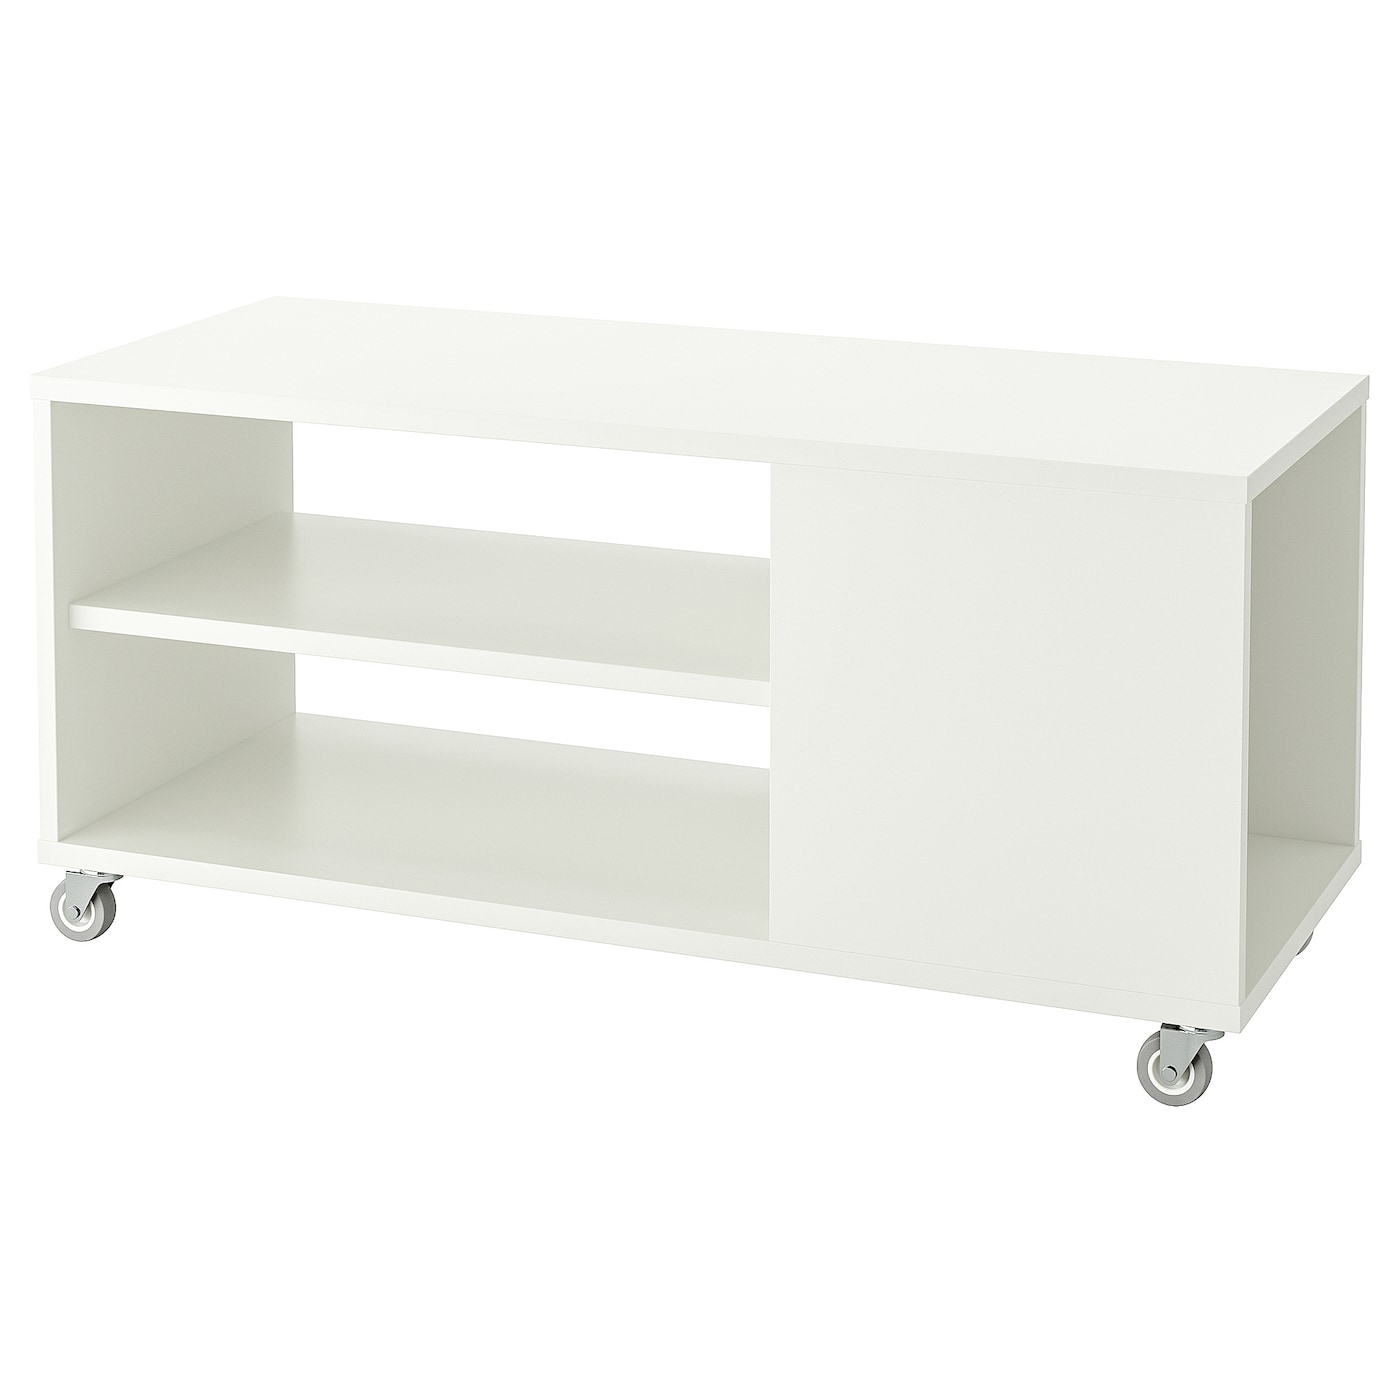 Журнальный стол на колесиках - IKEA ИКЕА VIHALS, 91х37х43 см, белый